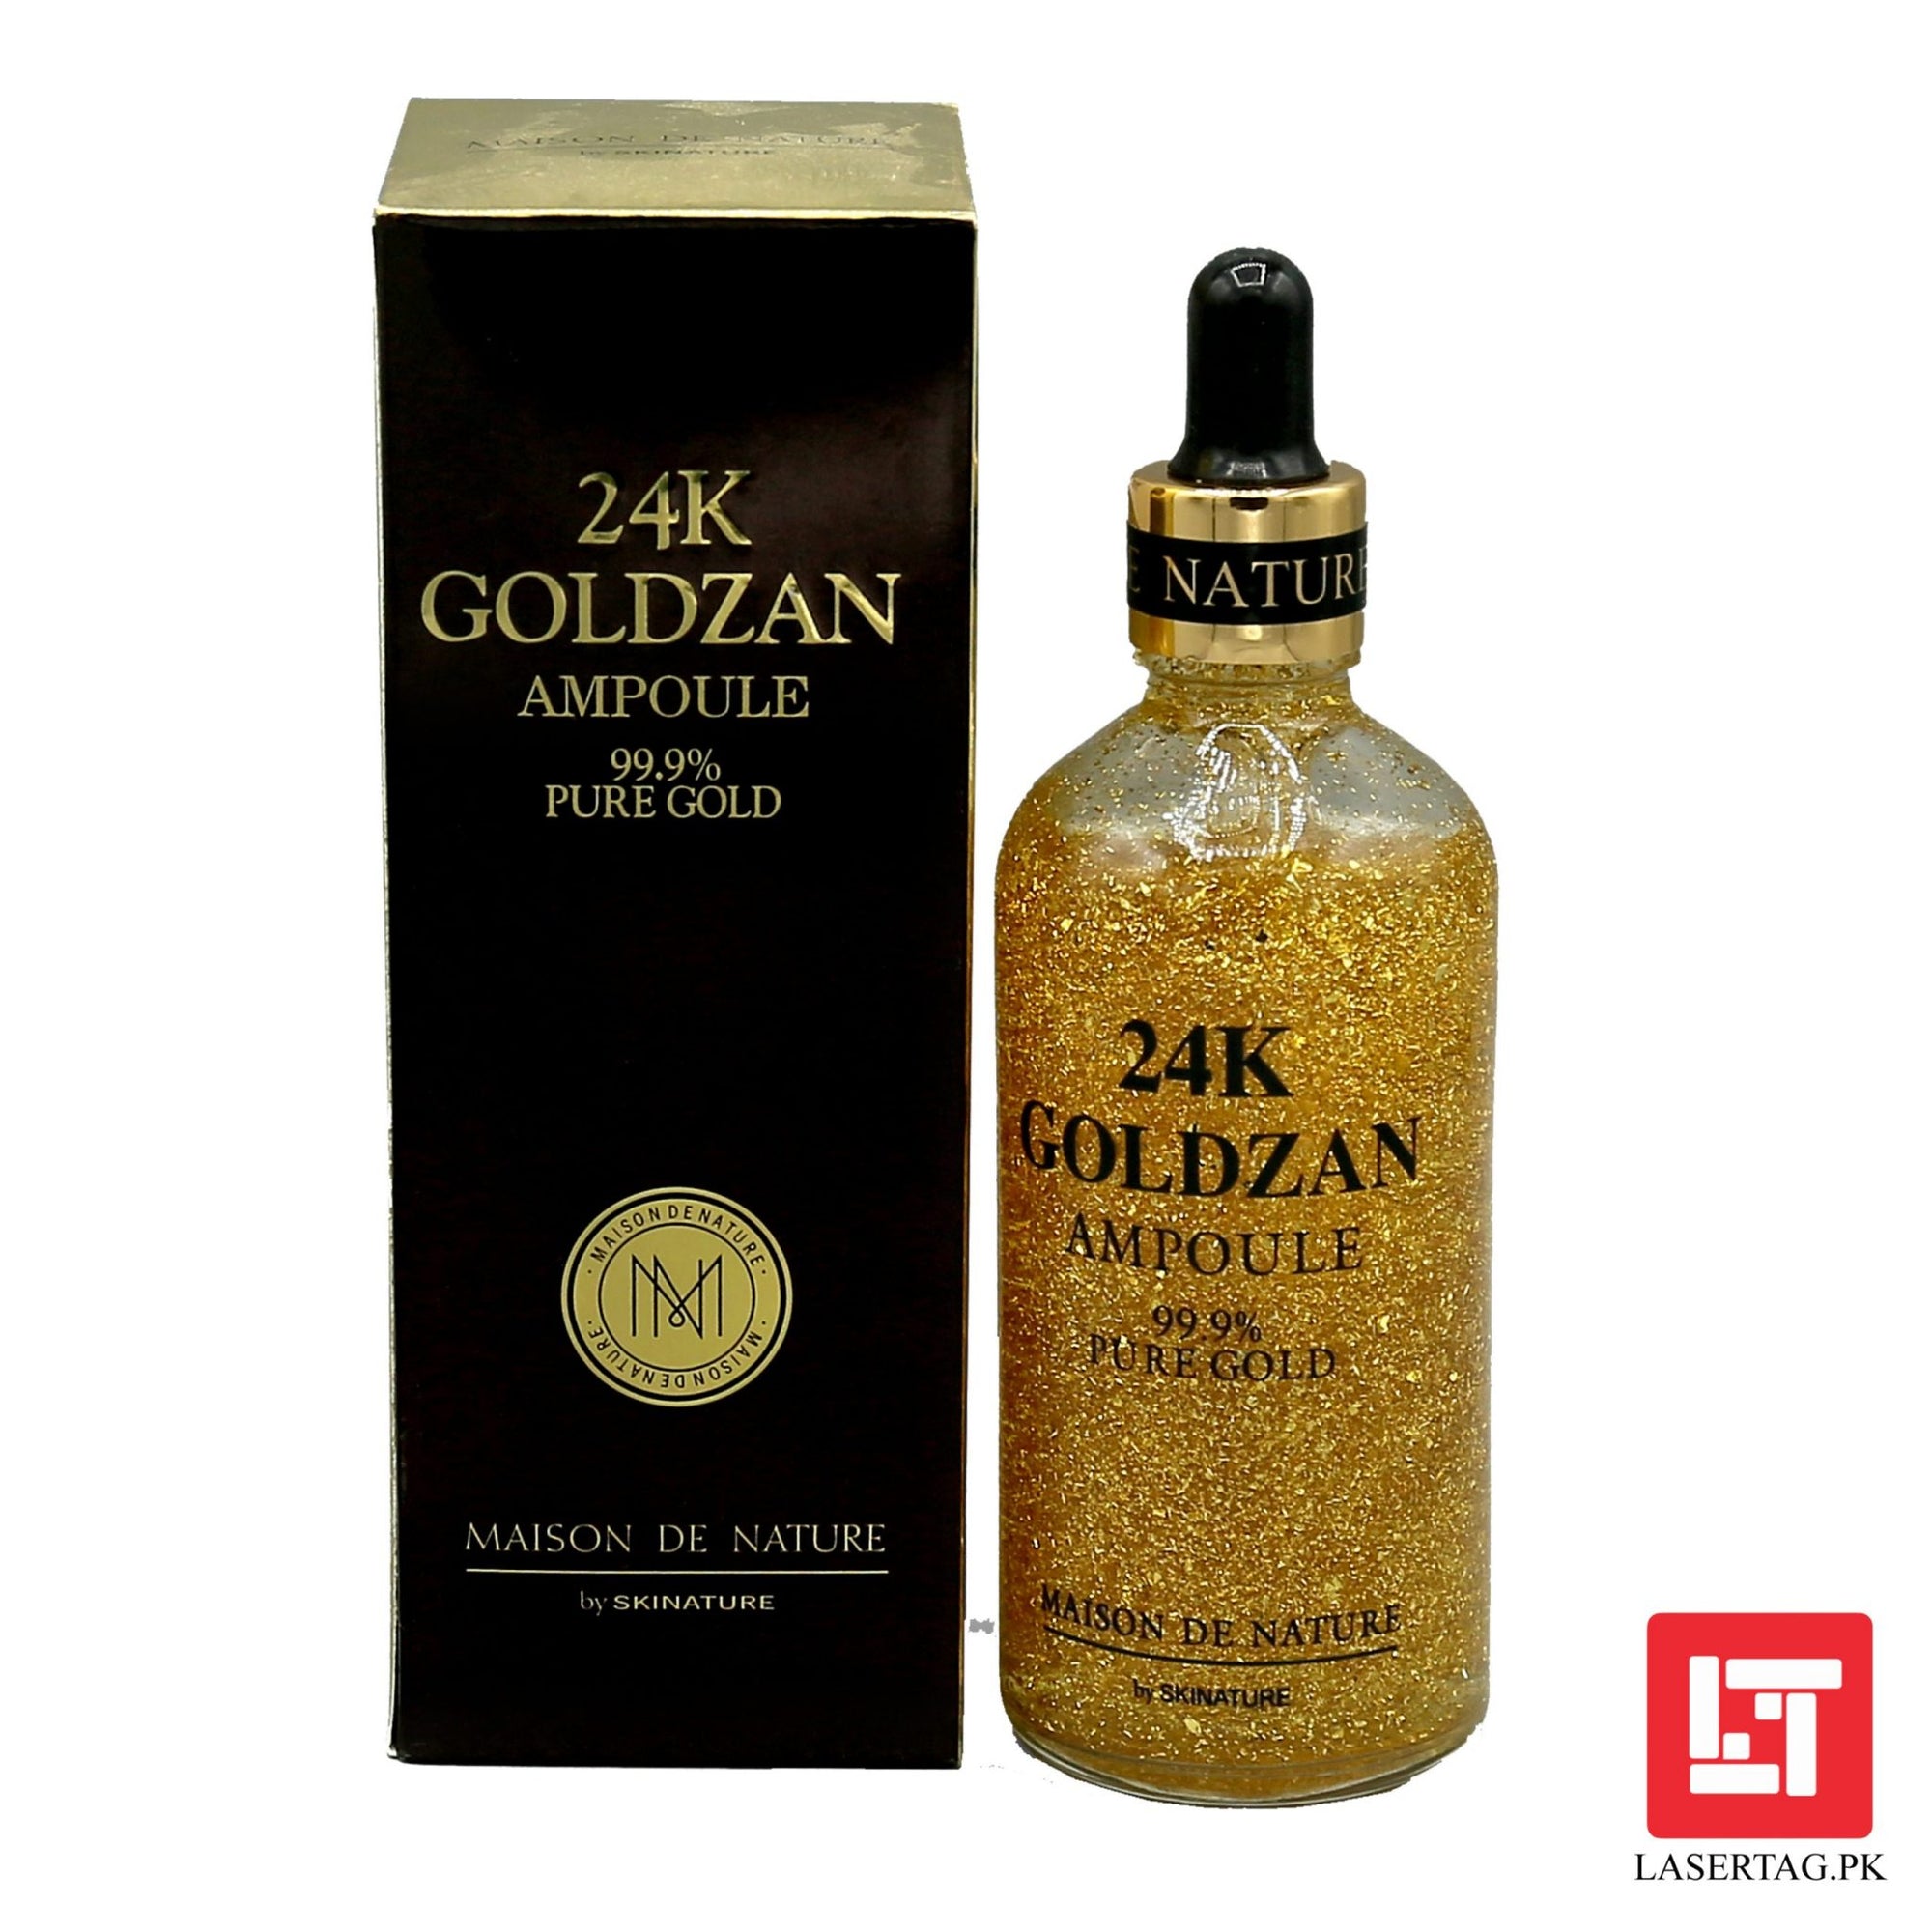 Skinnature 24K Goldzan Ampoule 99.9 Pure Gold 100ml freeshipping - lasertag.pk